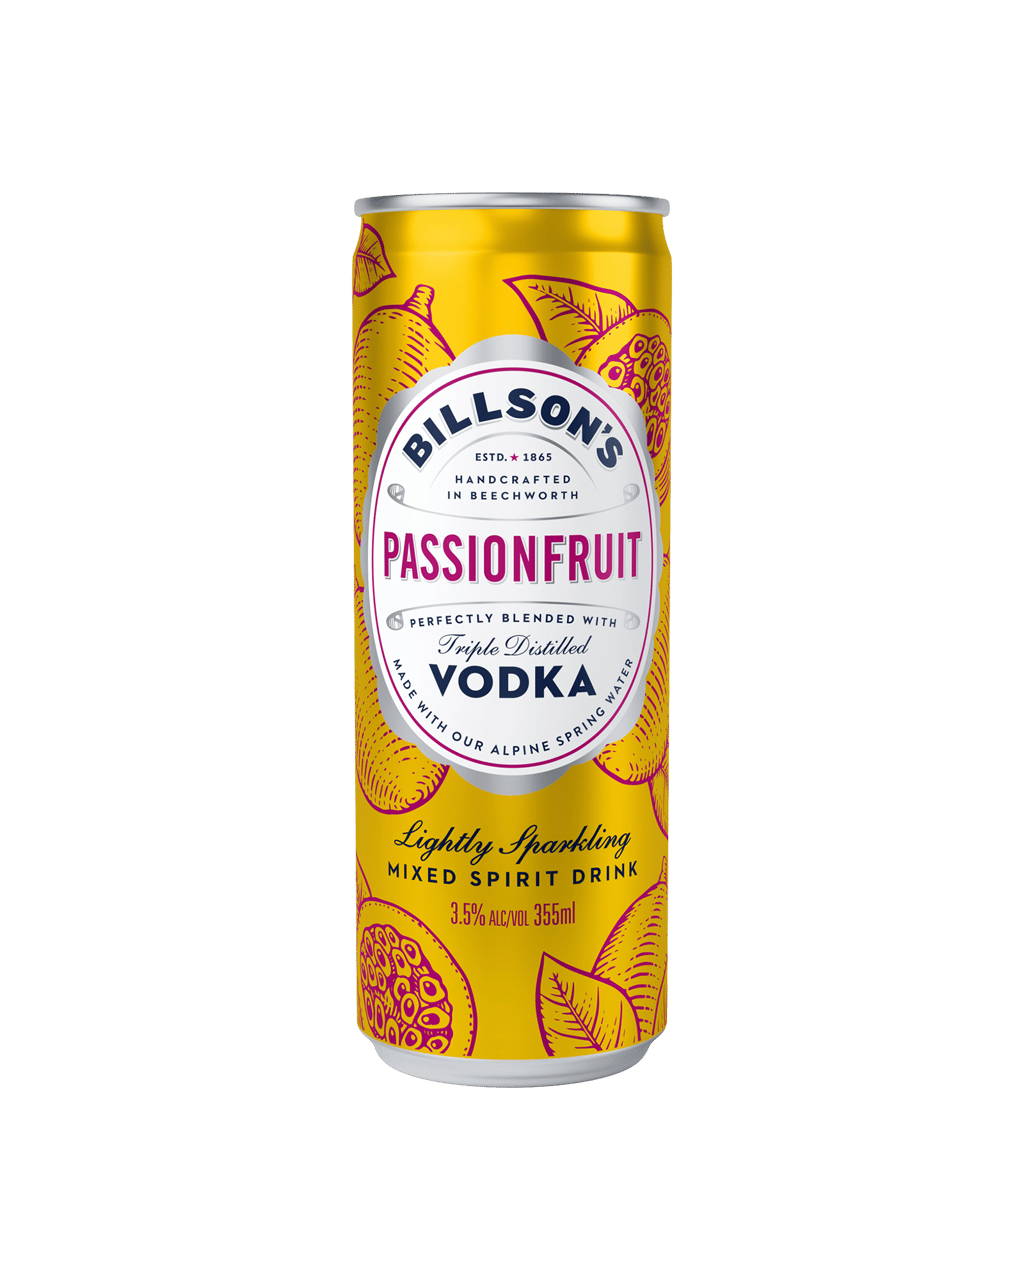 Image - Vodka Passionfruit by Billson's